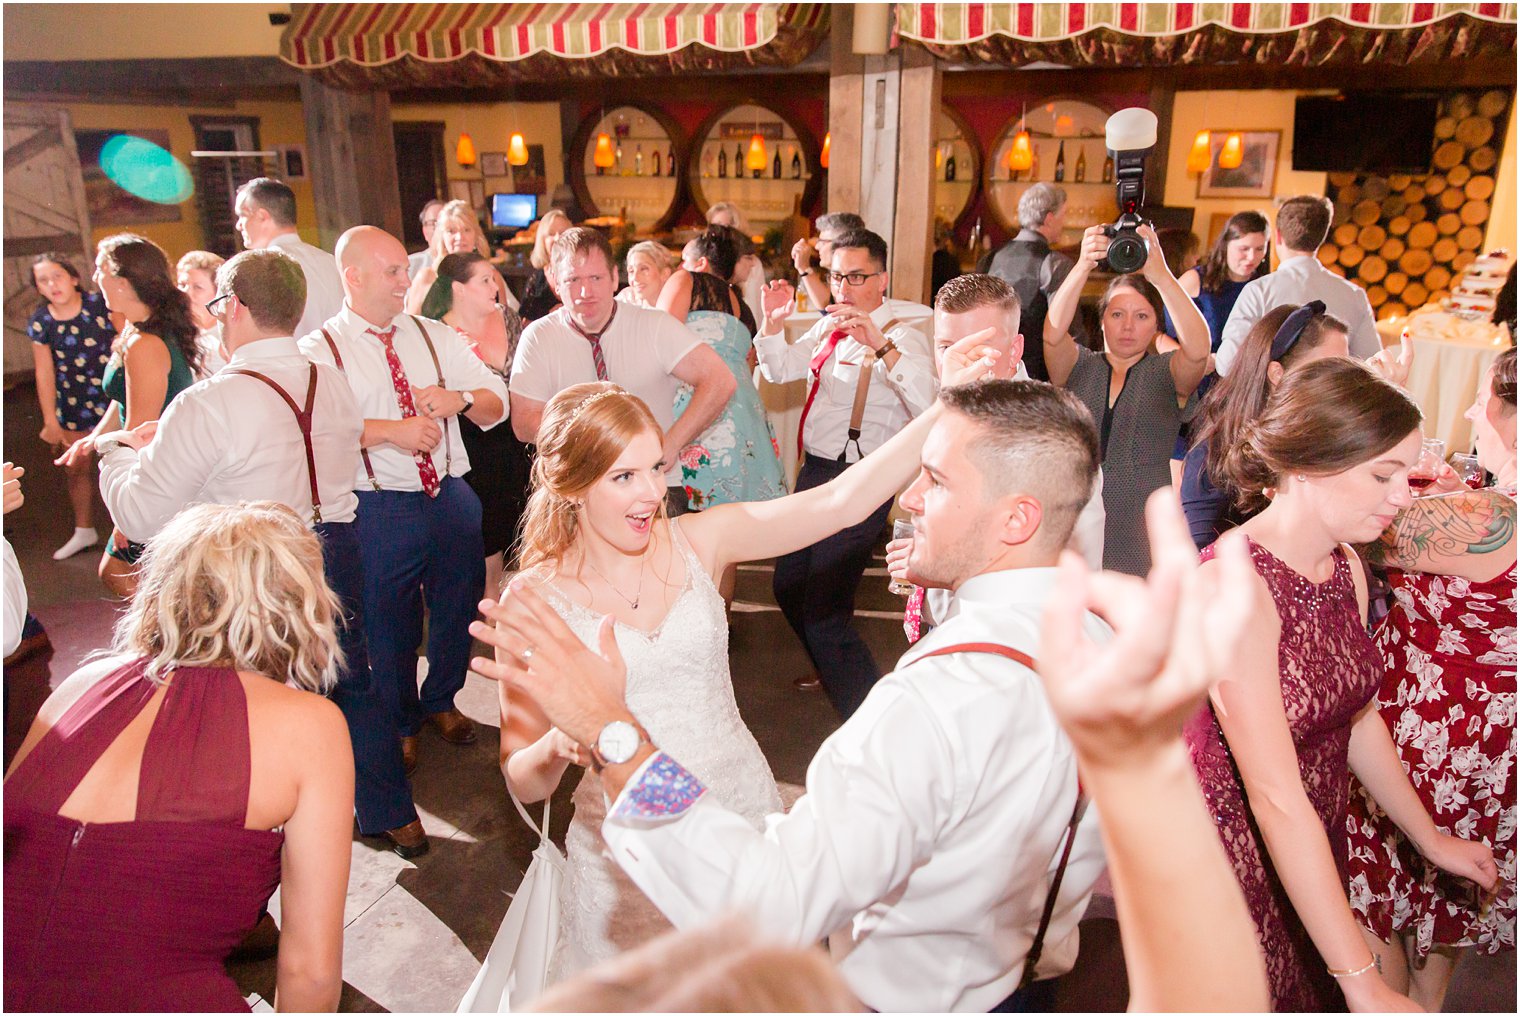 Bride and groom on dance floor at Laurita Winery